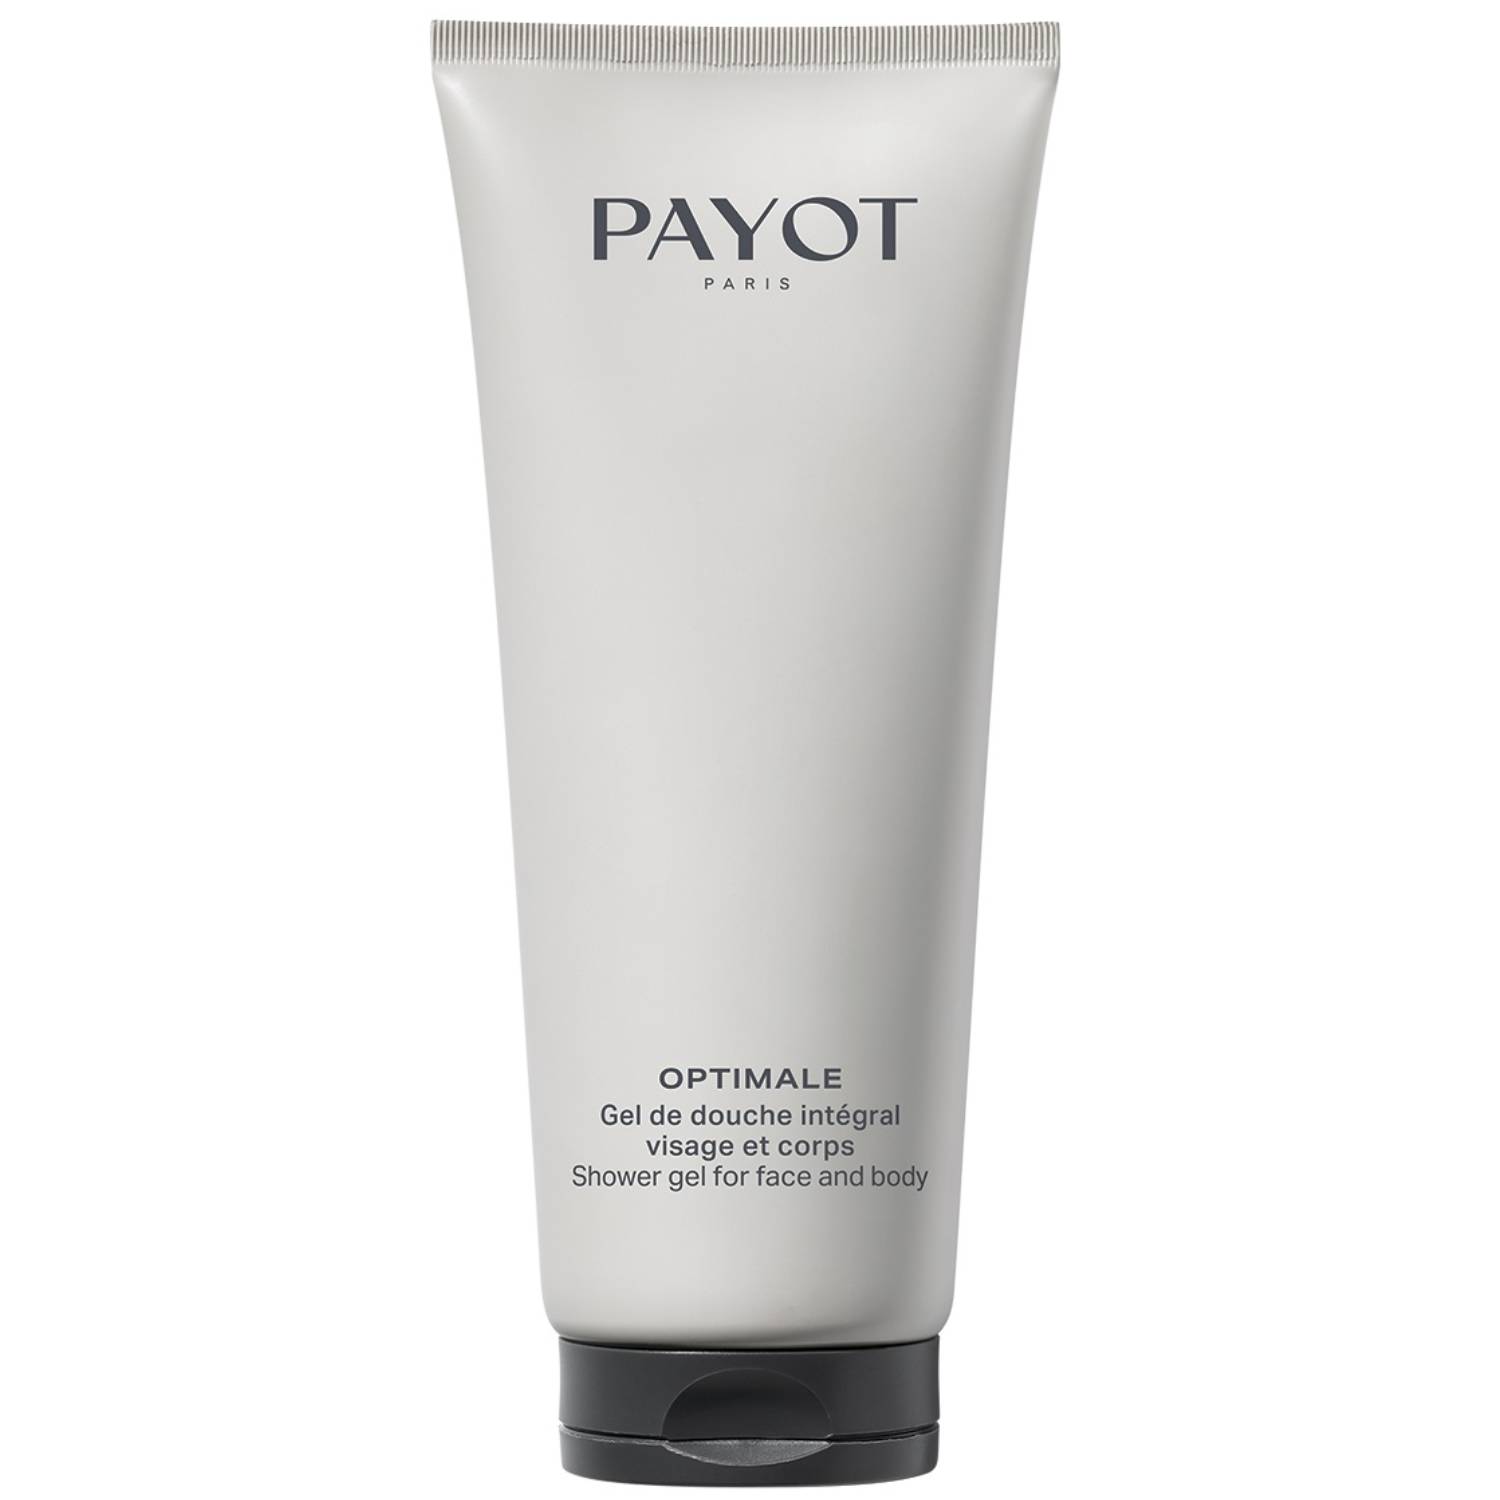 Payot Очищающий гель для волос, тела и лица Integral 3в1 для мужчин, 200 мл (Payot, Optimale) цена и фото